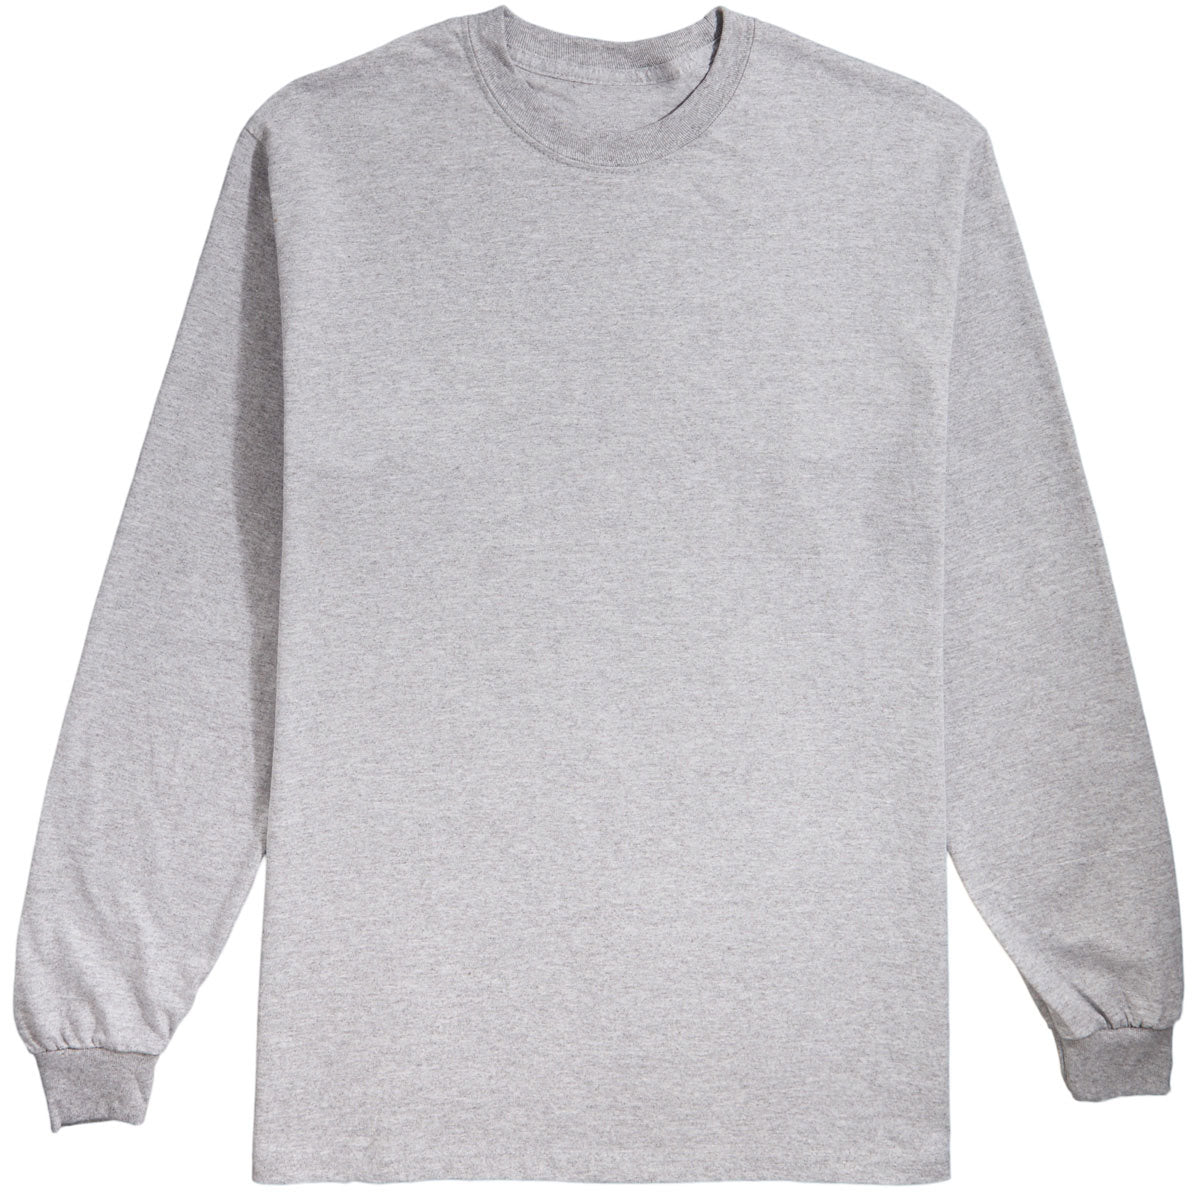 Converse F Reality Long Sleeve T-Shirt - Heather Grey - XL image 1